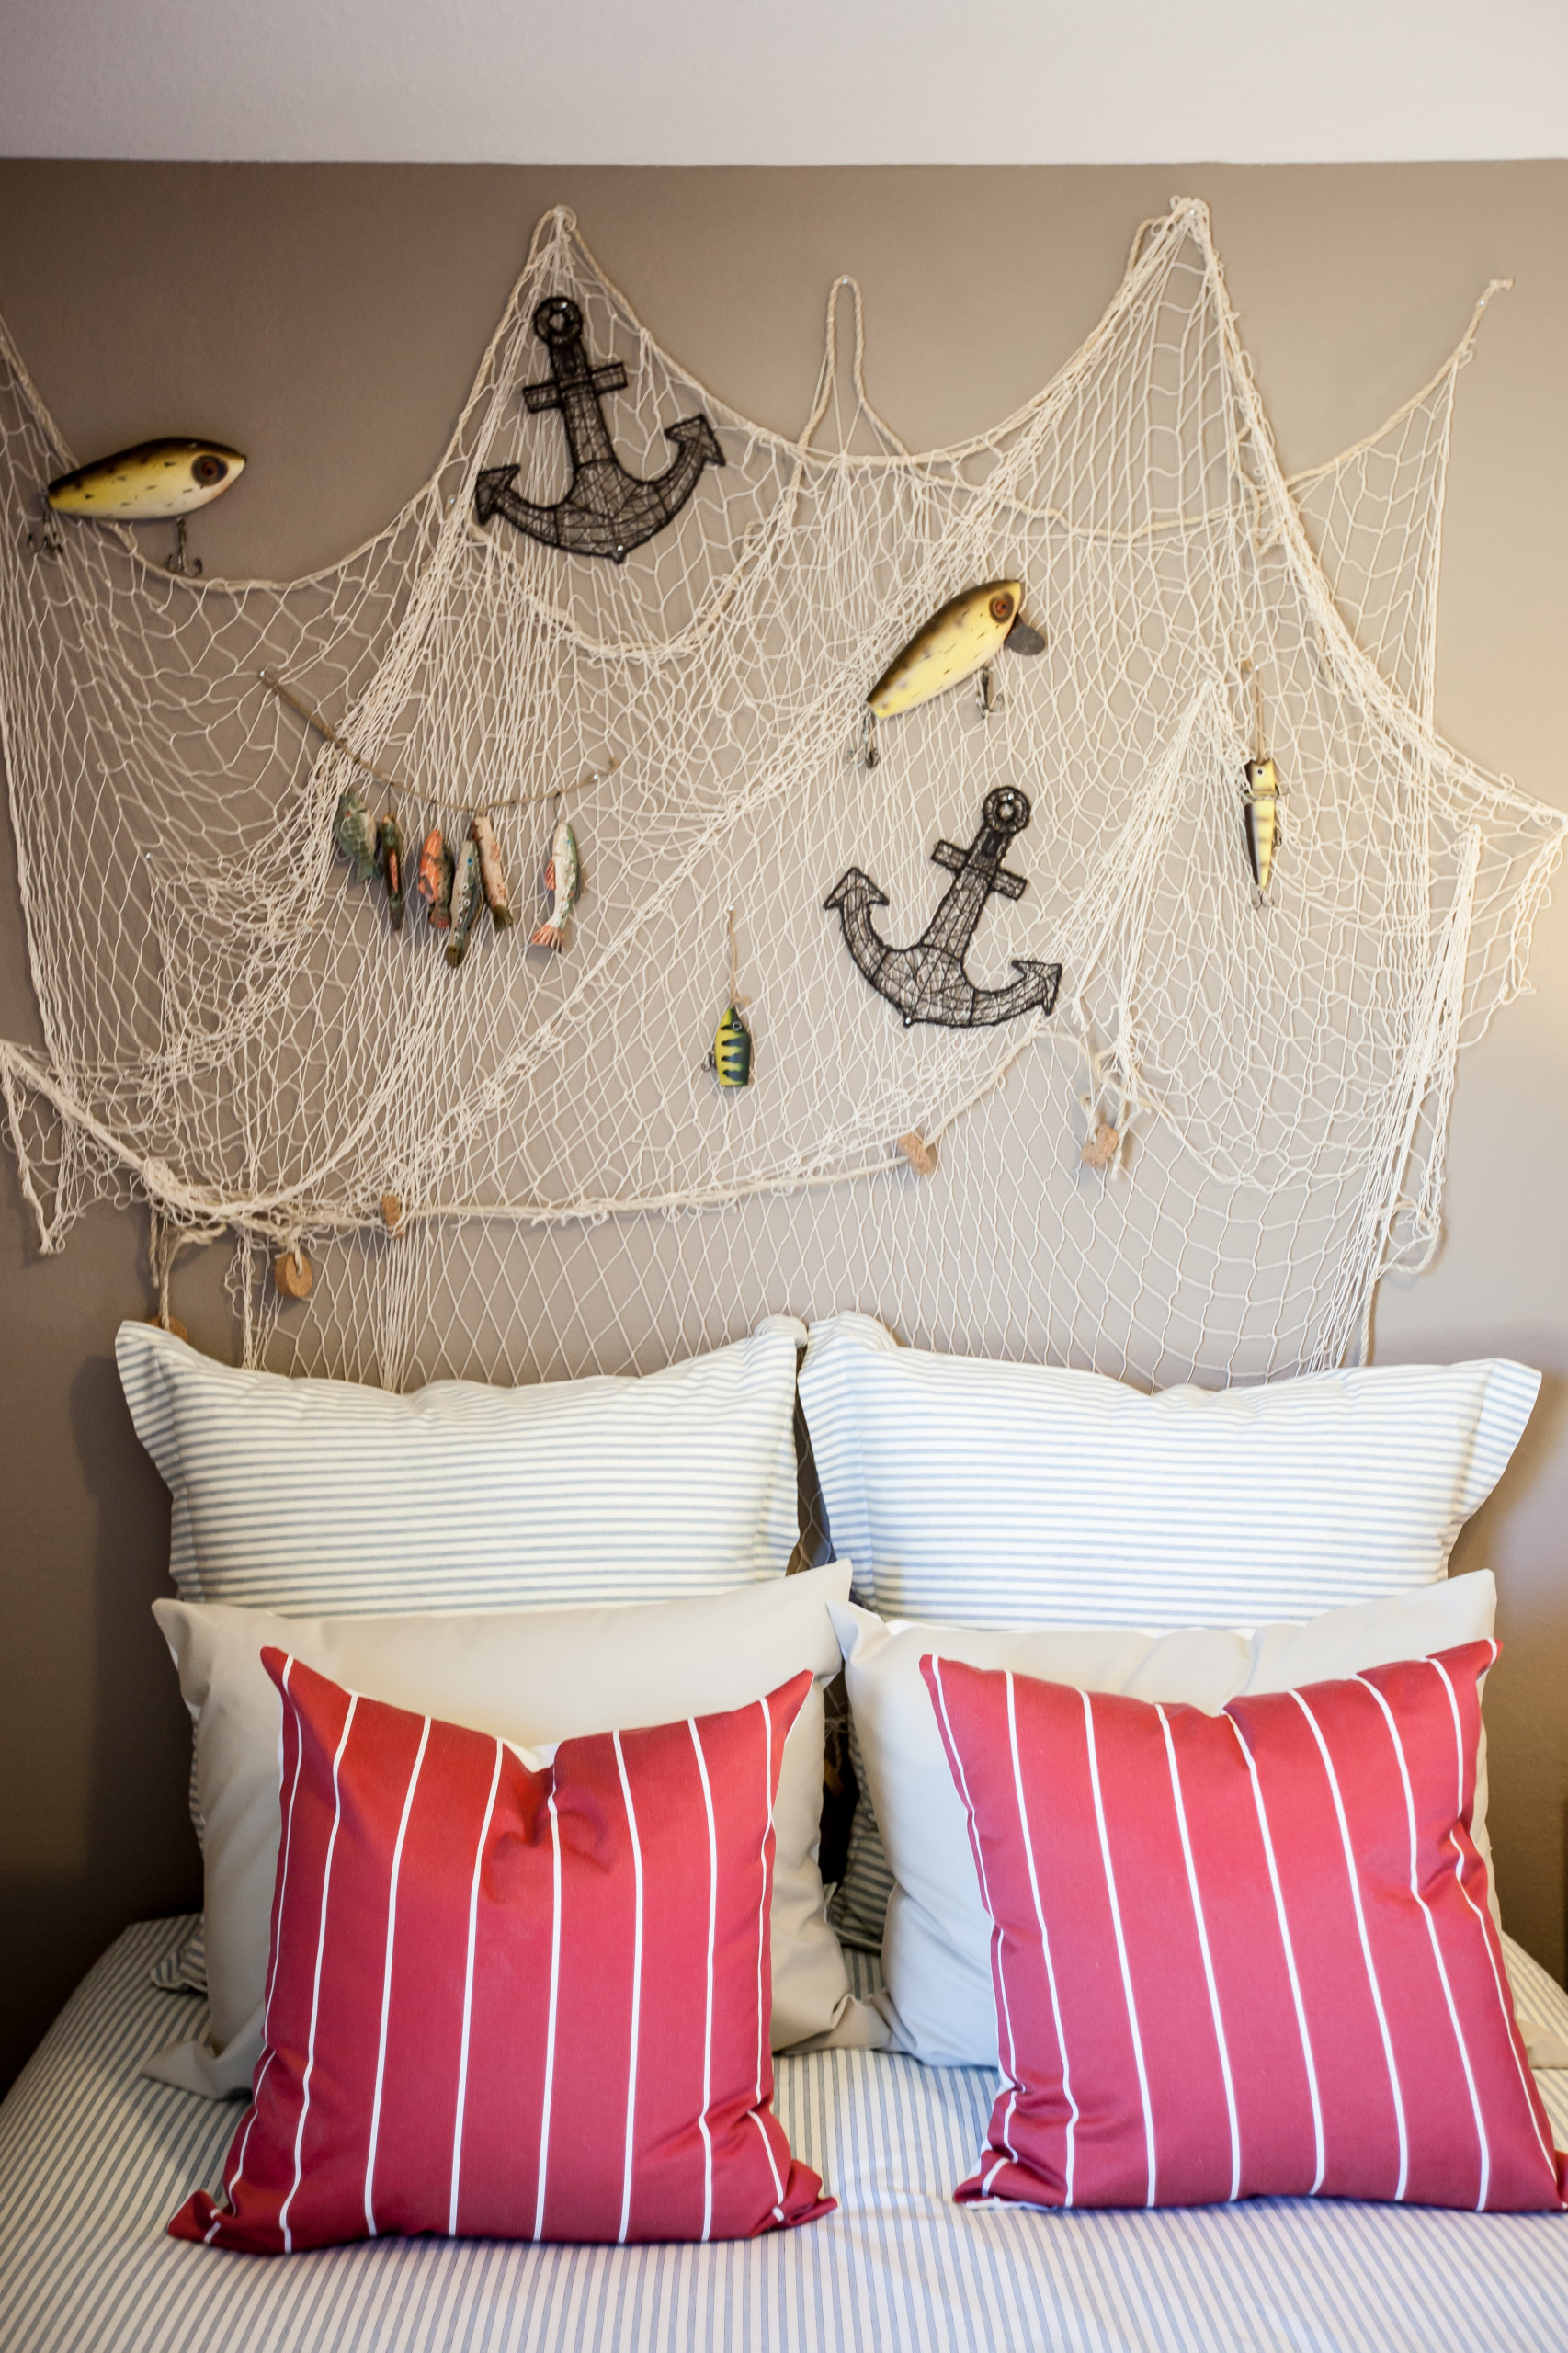 Fishing Bedroom Decorations